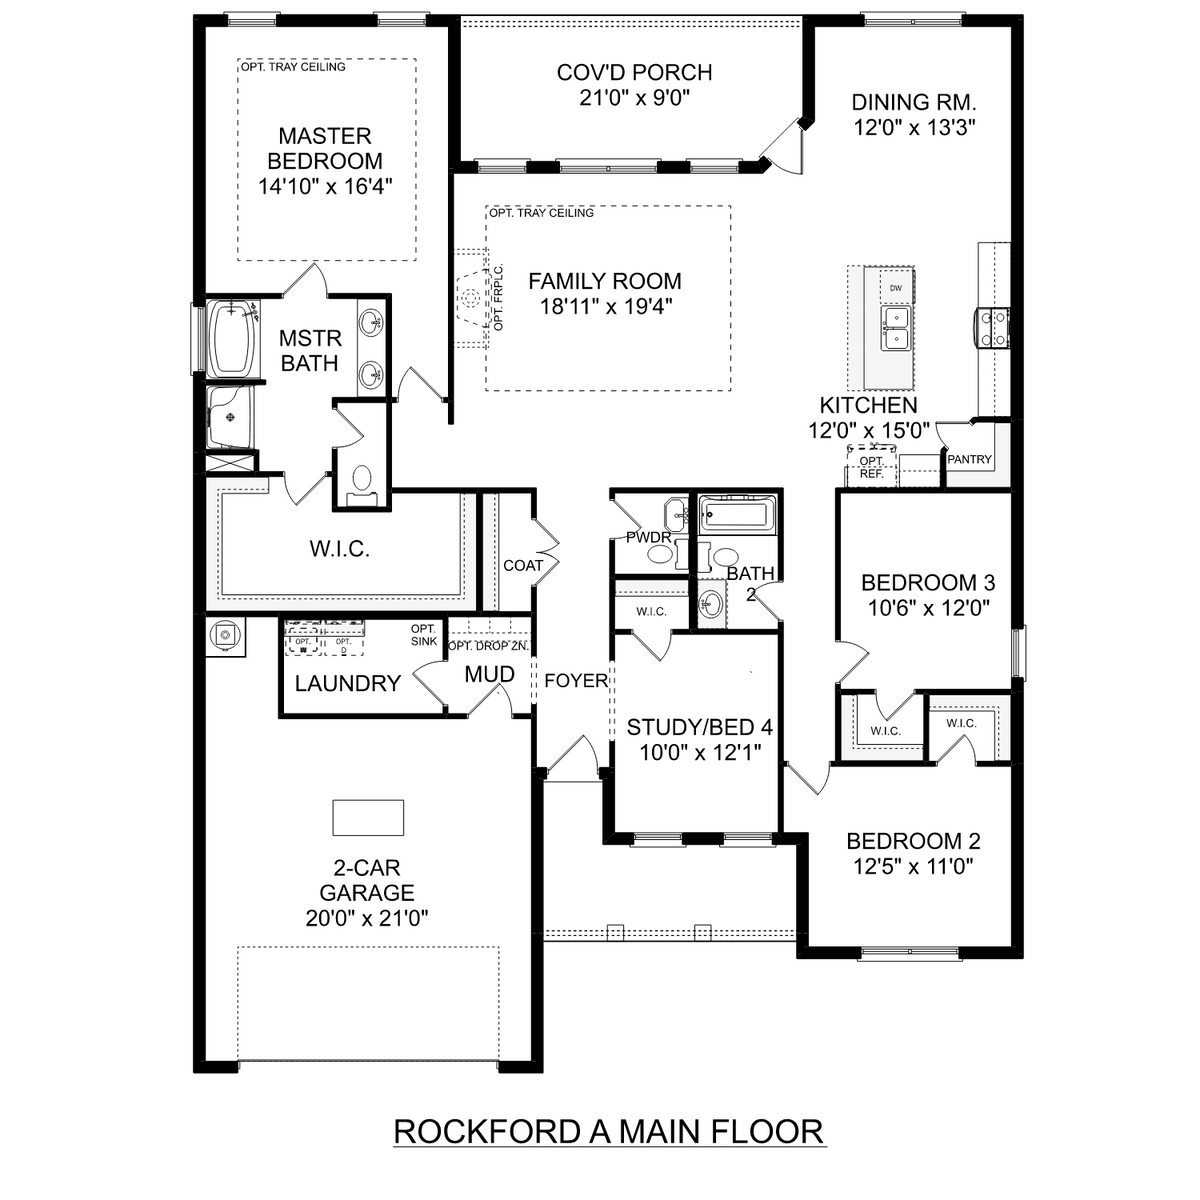 1 - The Rockford floor plan layout for 2114 Brandon Drive in Davidson Homes' North Ridge community.